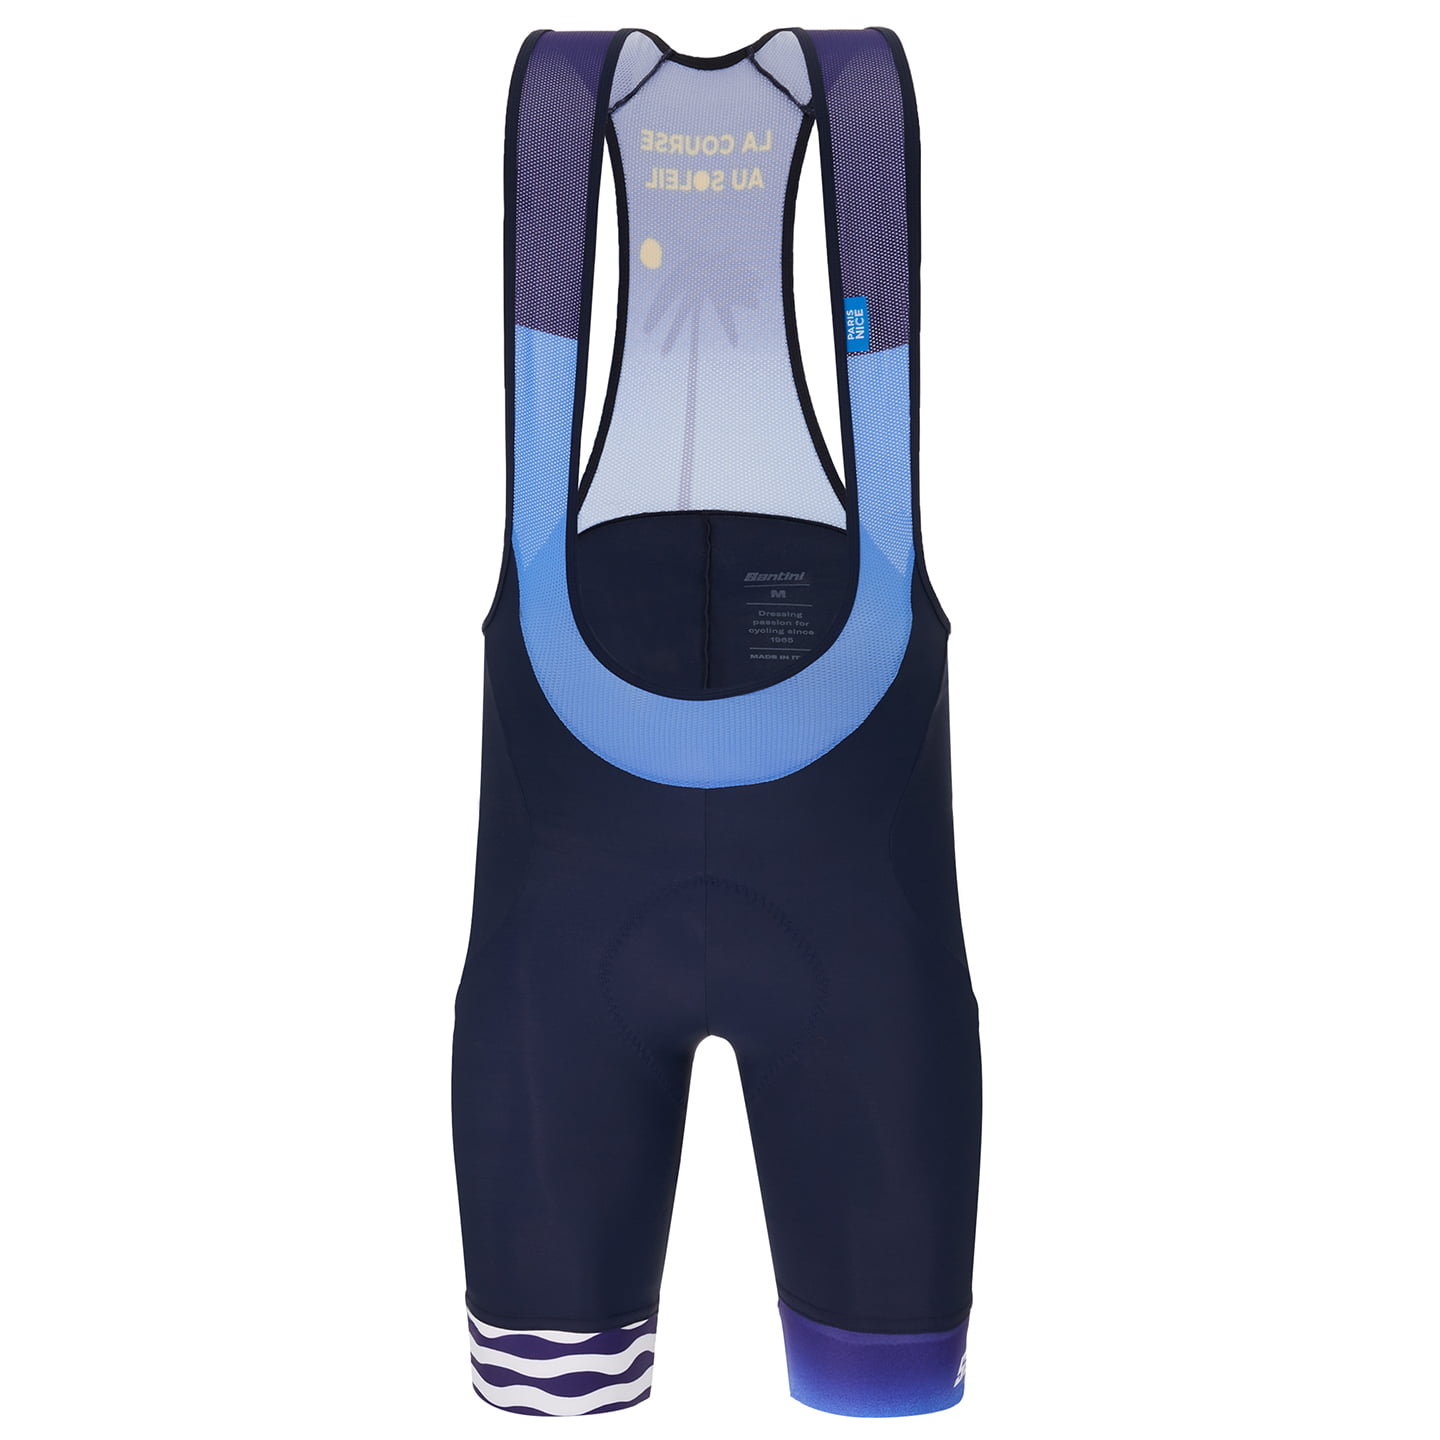 SANTINI Paris-Nice 2023 Bib Shorts, for men, size S, Cycle shorts, Cycling clothing